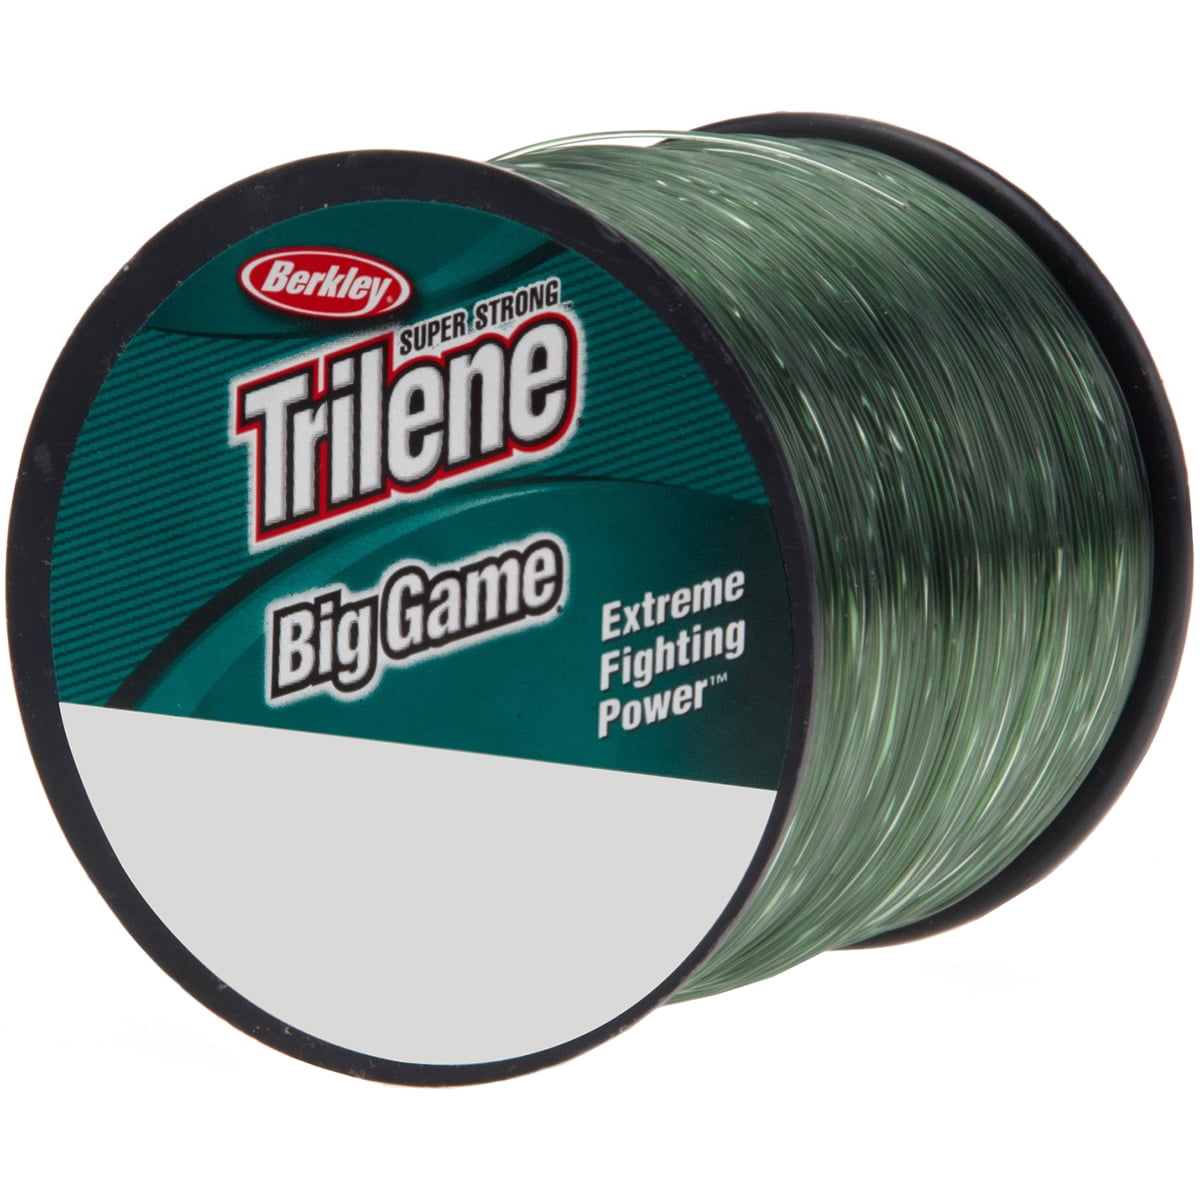 Berkley Trilene Big Game Line - Green 15lb